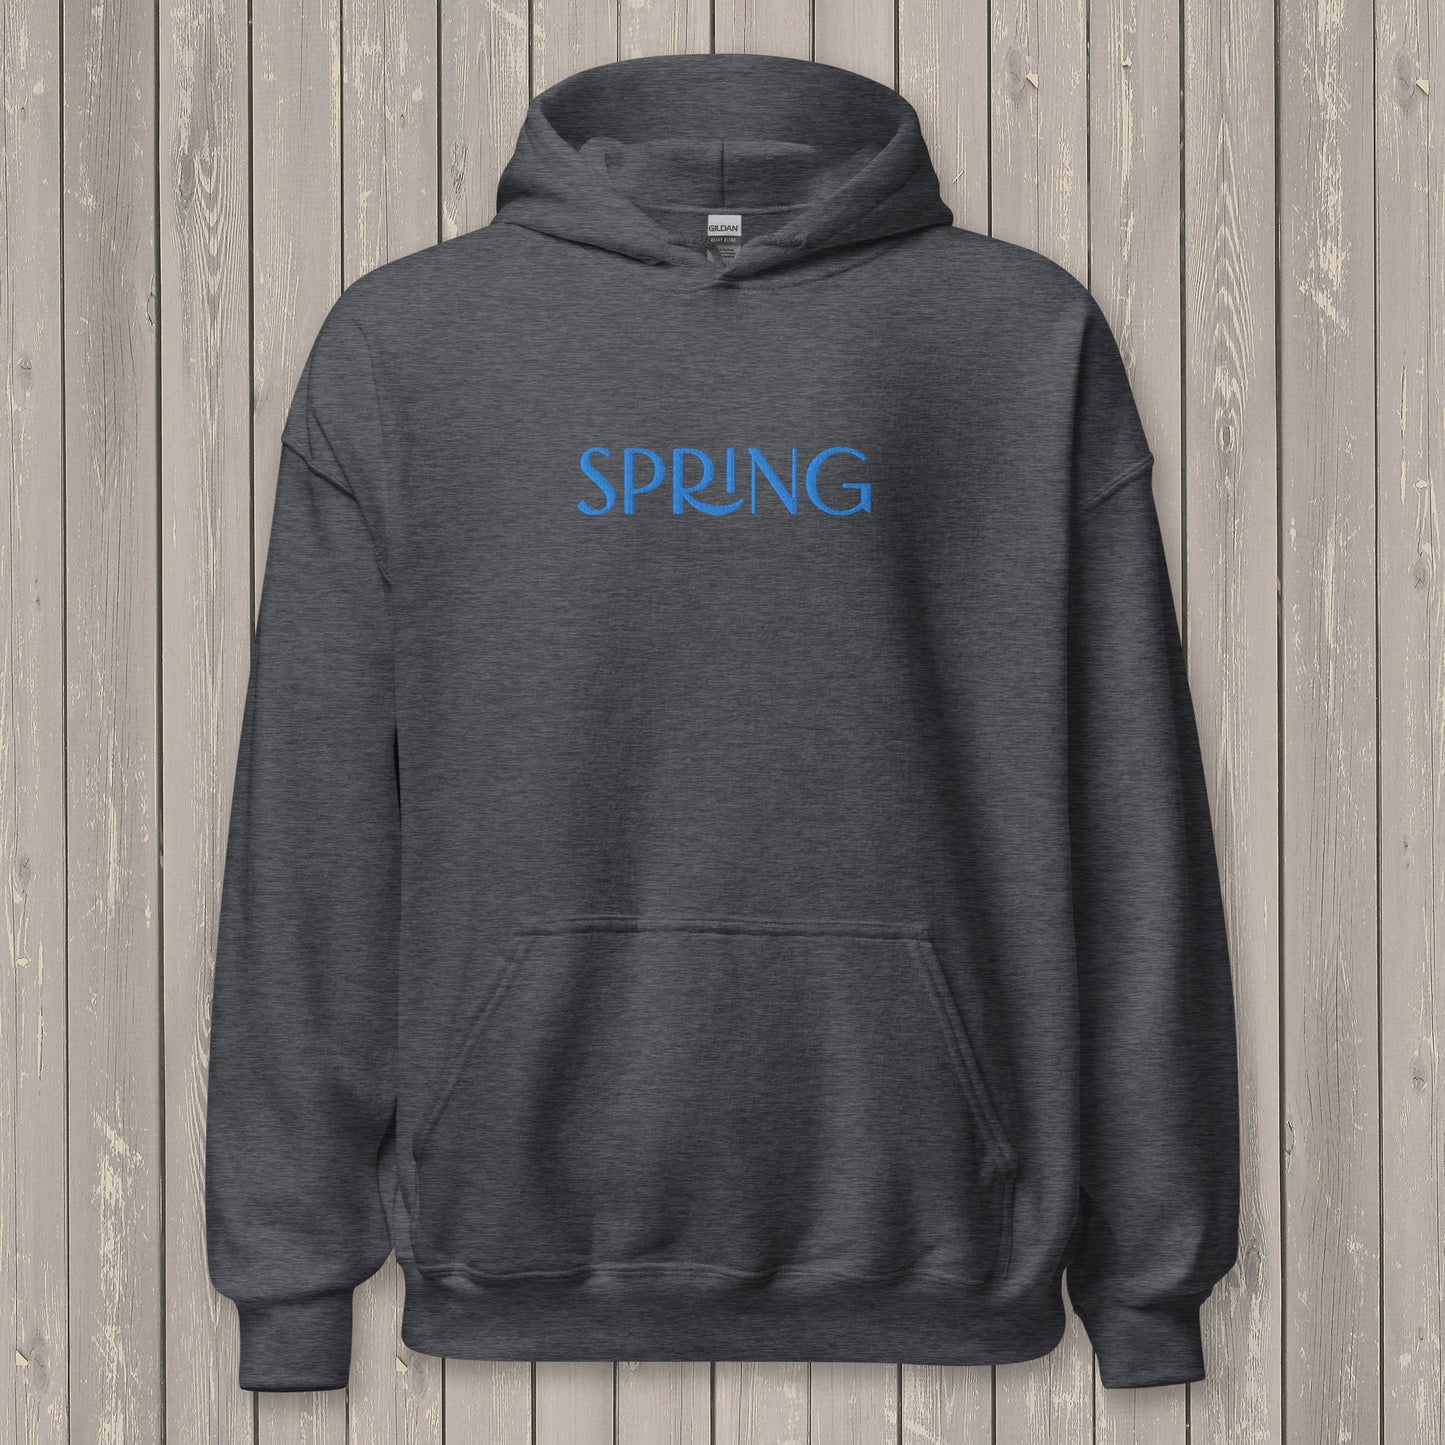 Hoodie "Spring" (Embroidery)